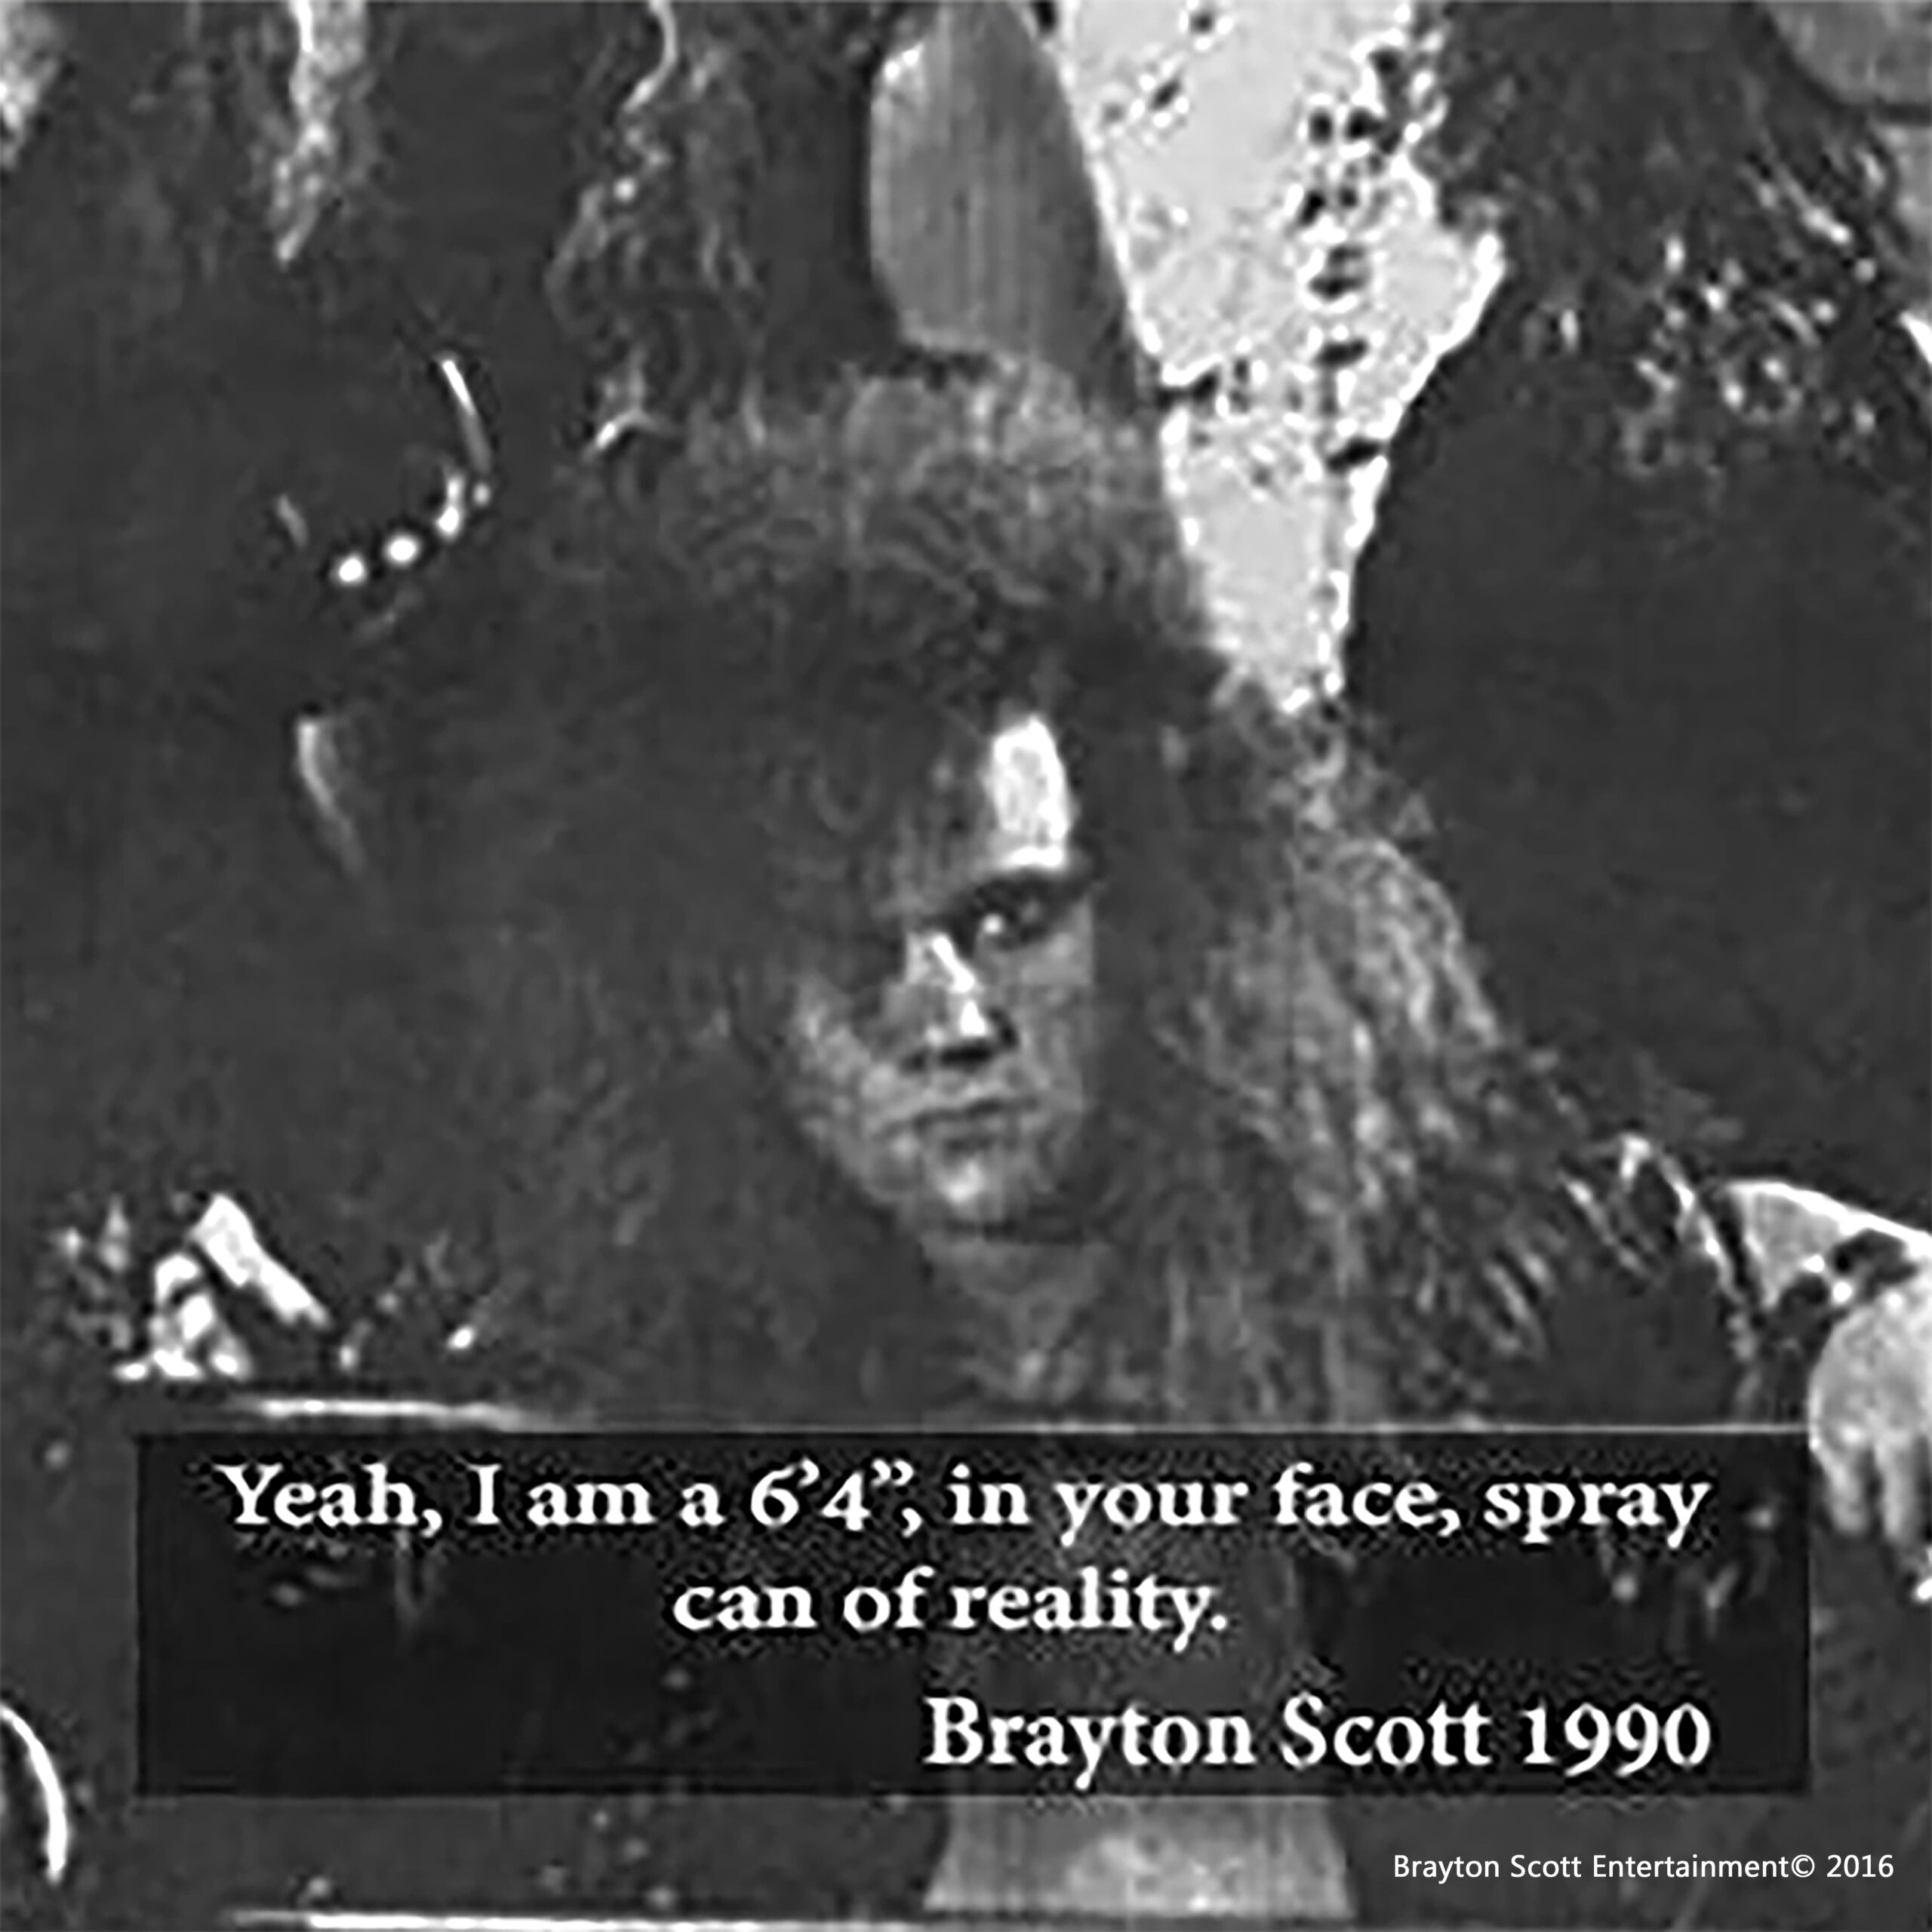 Image of Brayton Scott profile image from Bad girls dream 1990